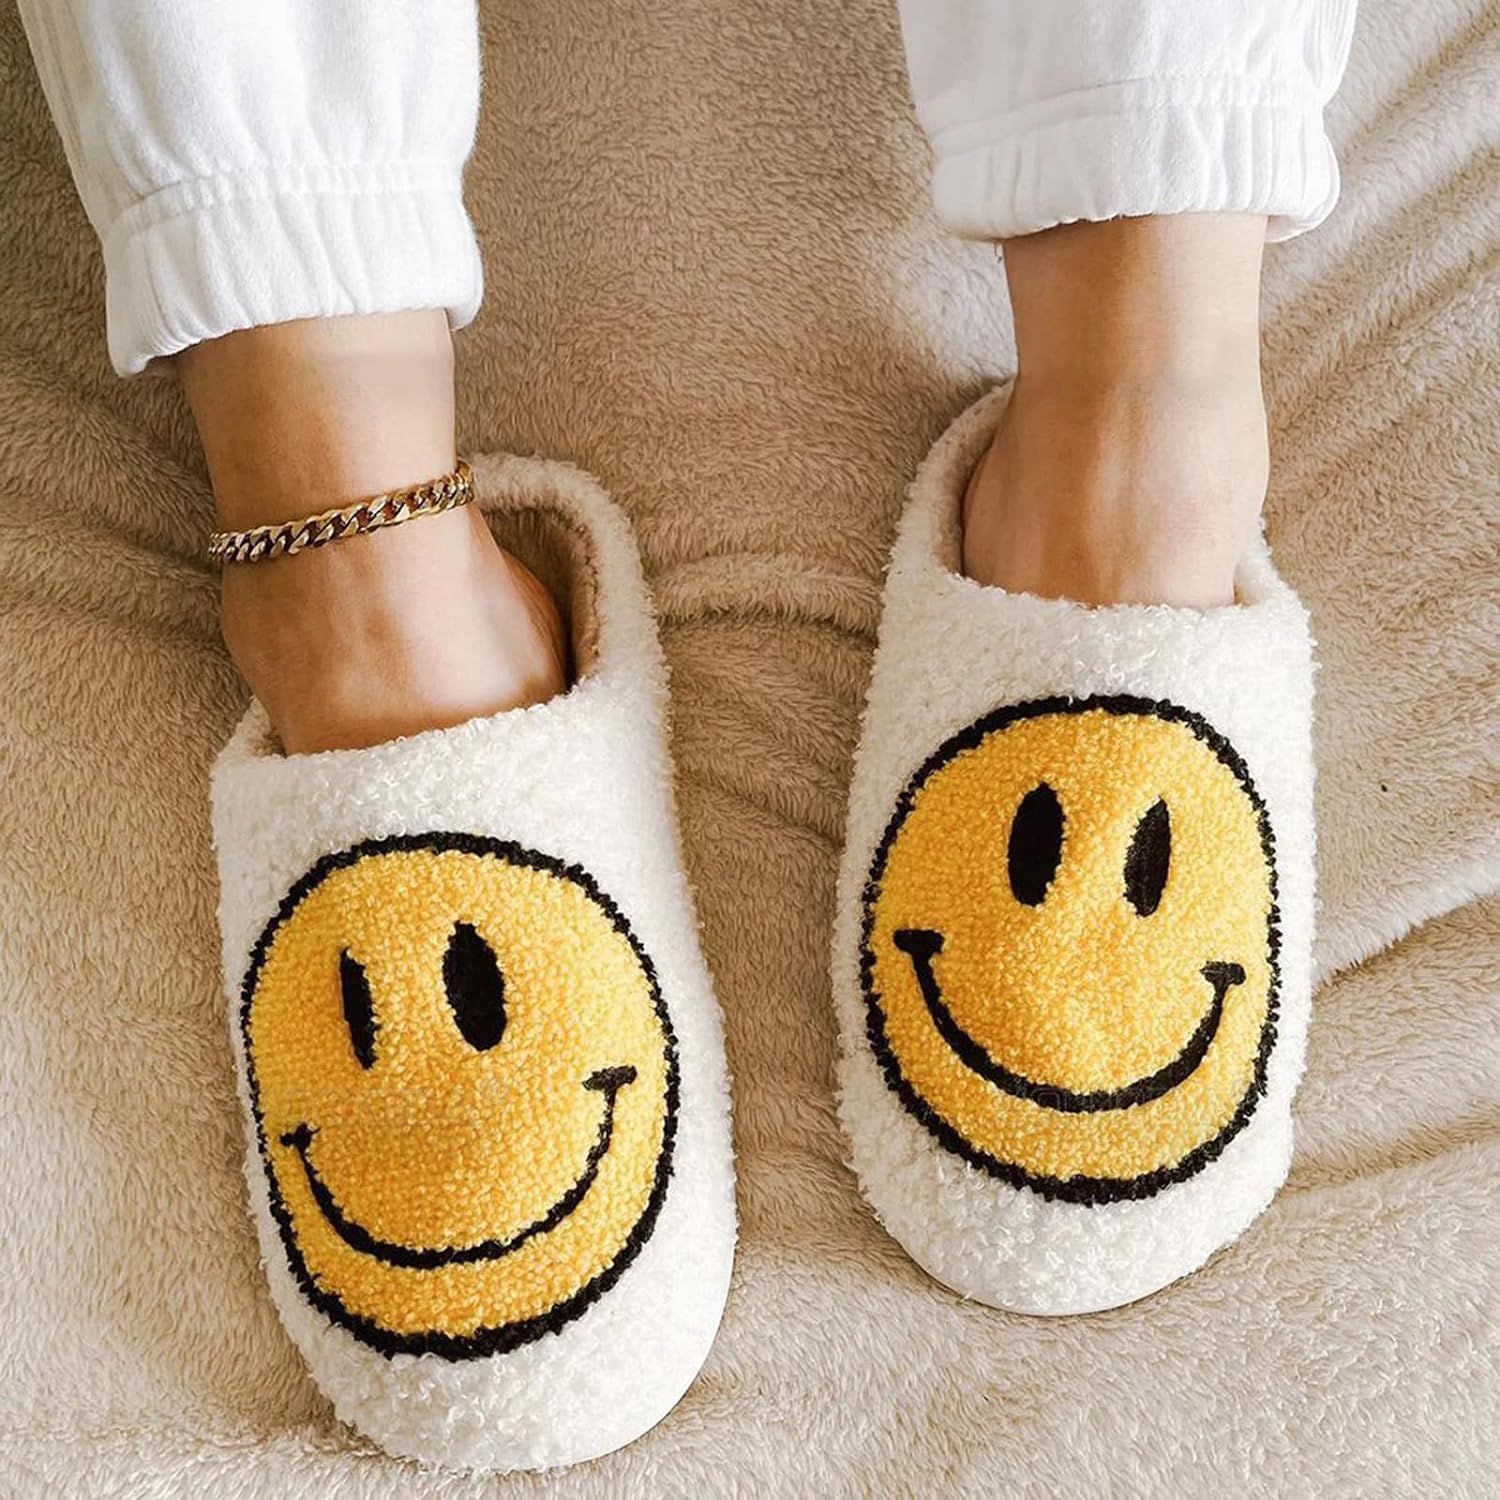 Retro smiley face soft plush comfy warm slip-on slippers | Amazon (US)